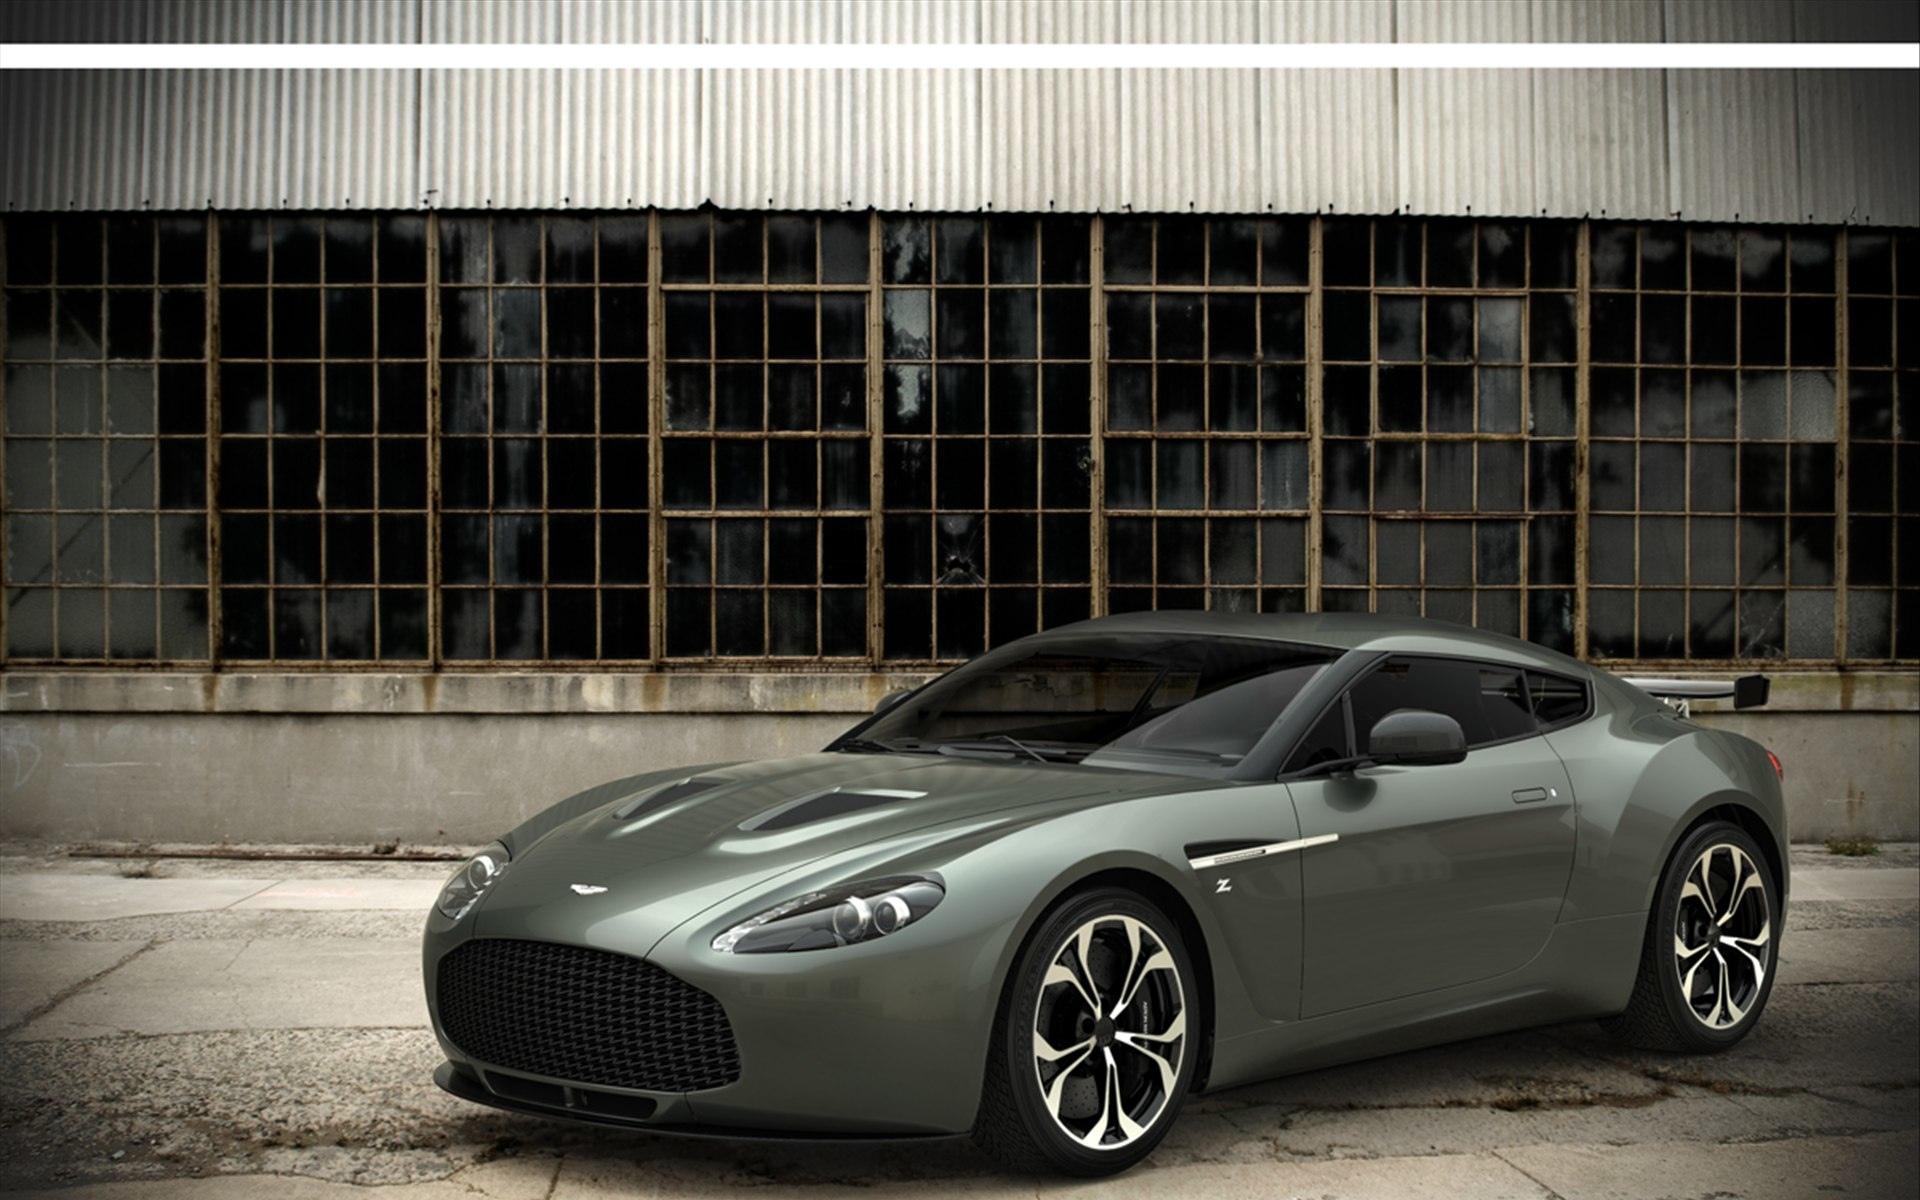 Aston Martin V12 Zagato at 2048 x 2048 iPad size wallpapers HD quality